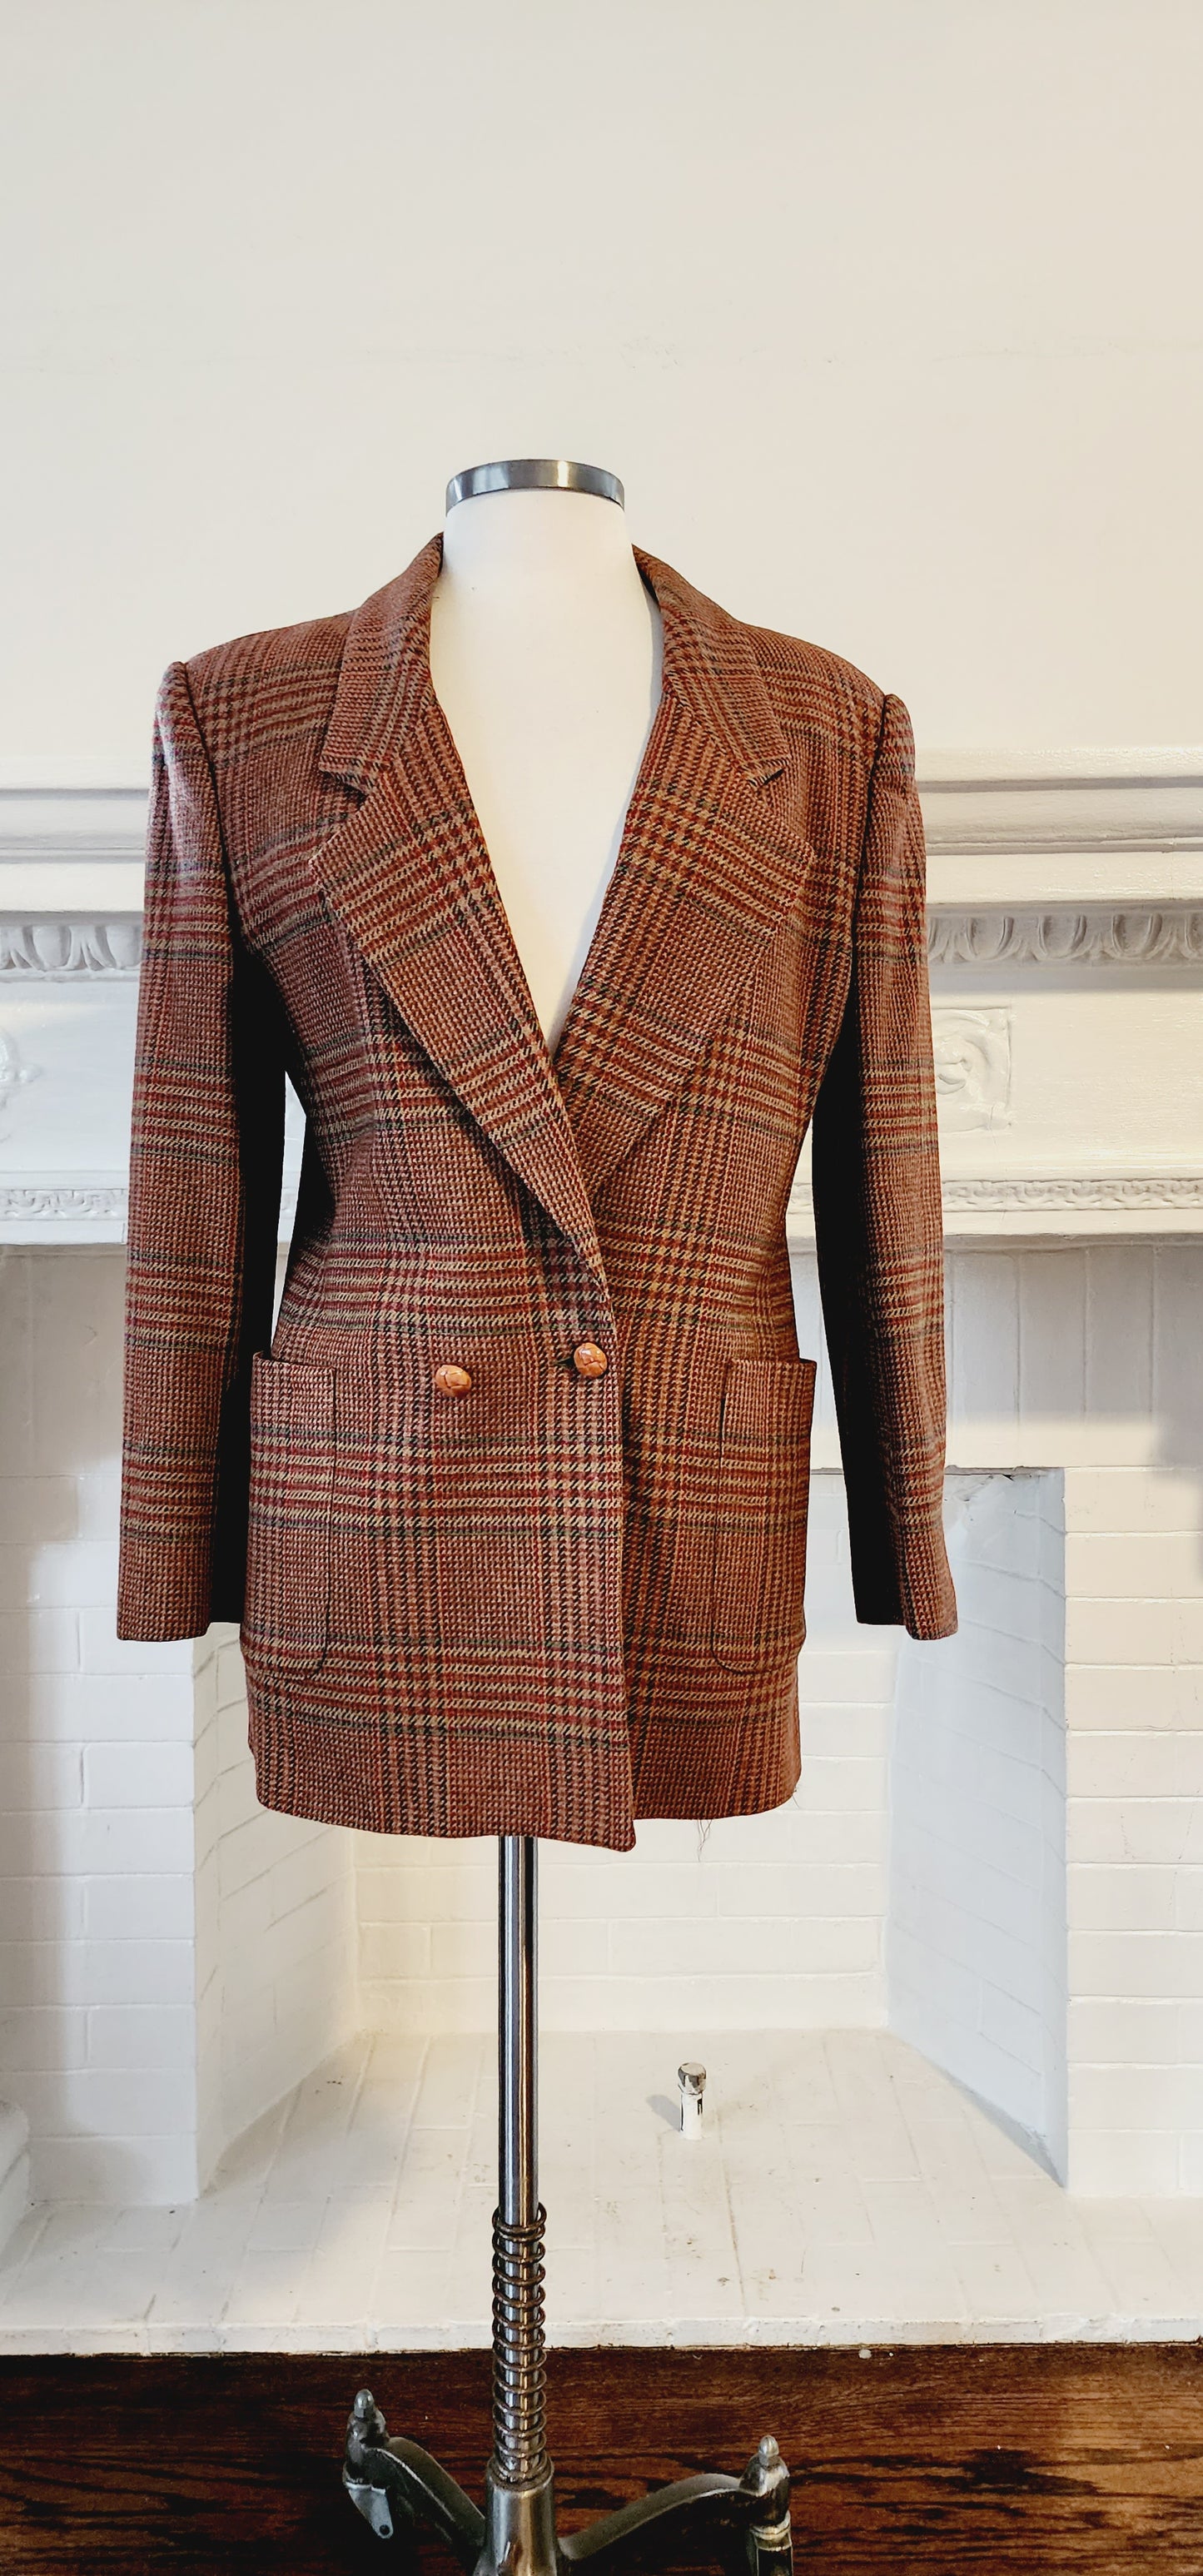 80s Wool Plaid Blazer in Brown Tones by Field Manor S/M